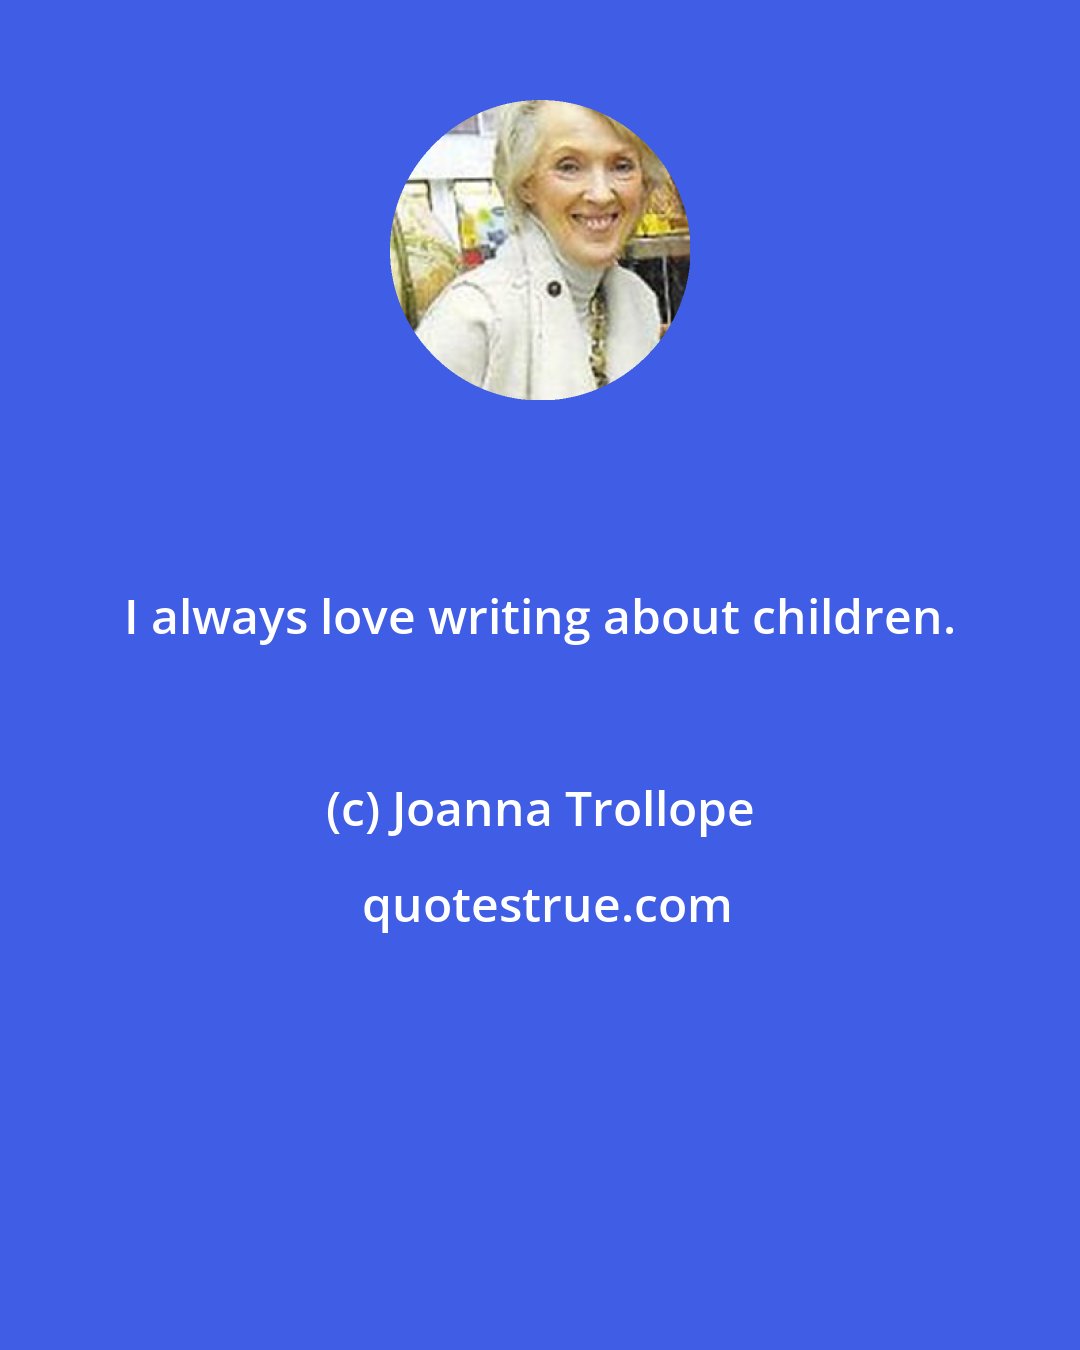 Joanna Trollope: I always love writing about children.